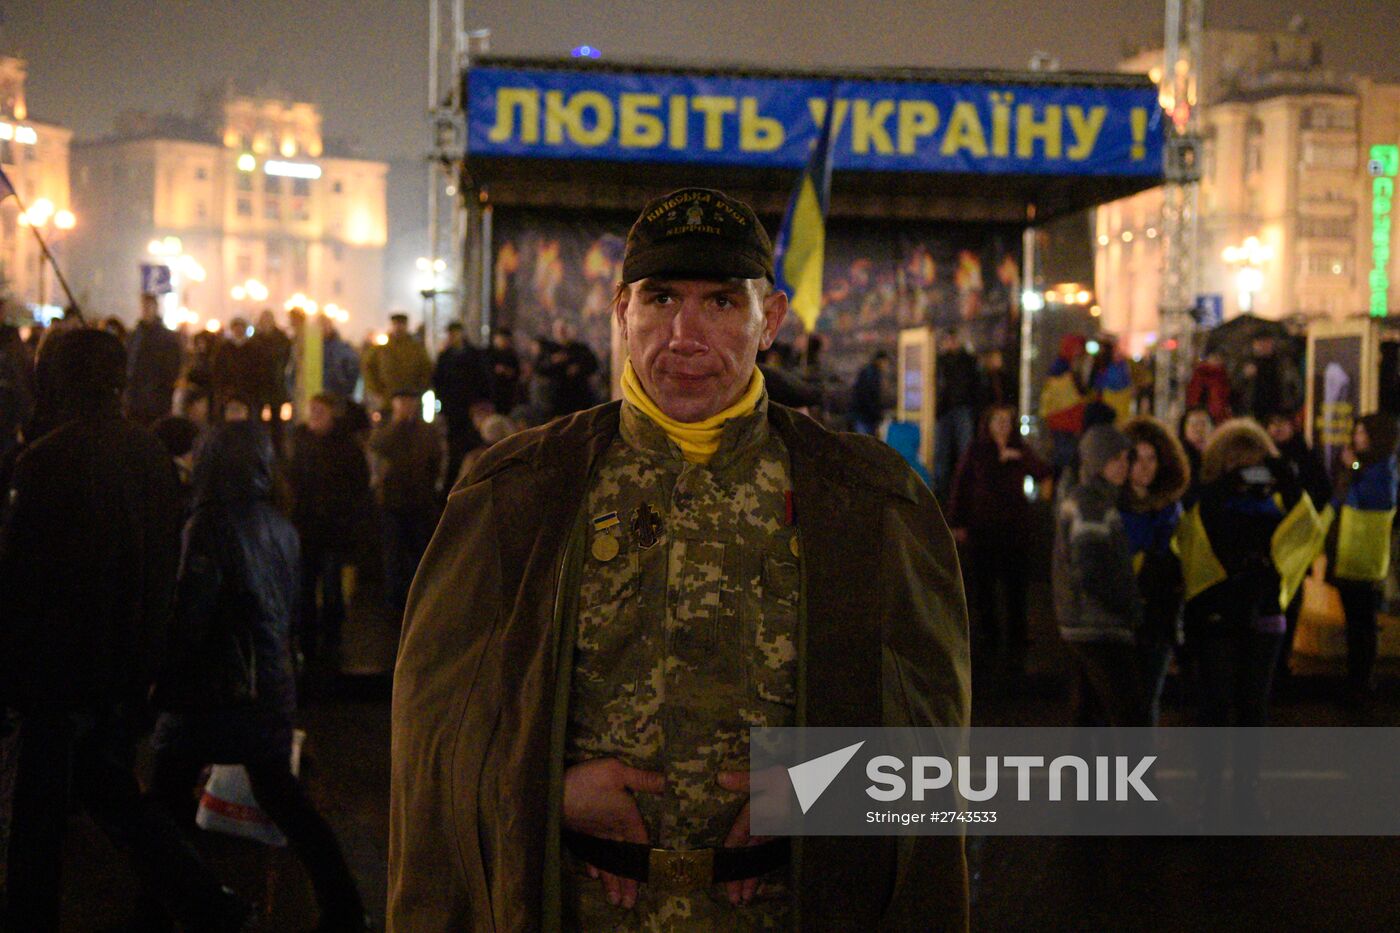 Anniversary of Maidan in Kiev